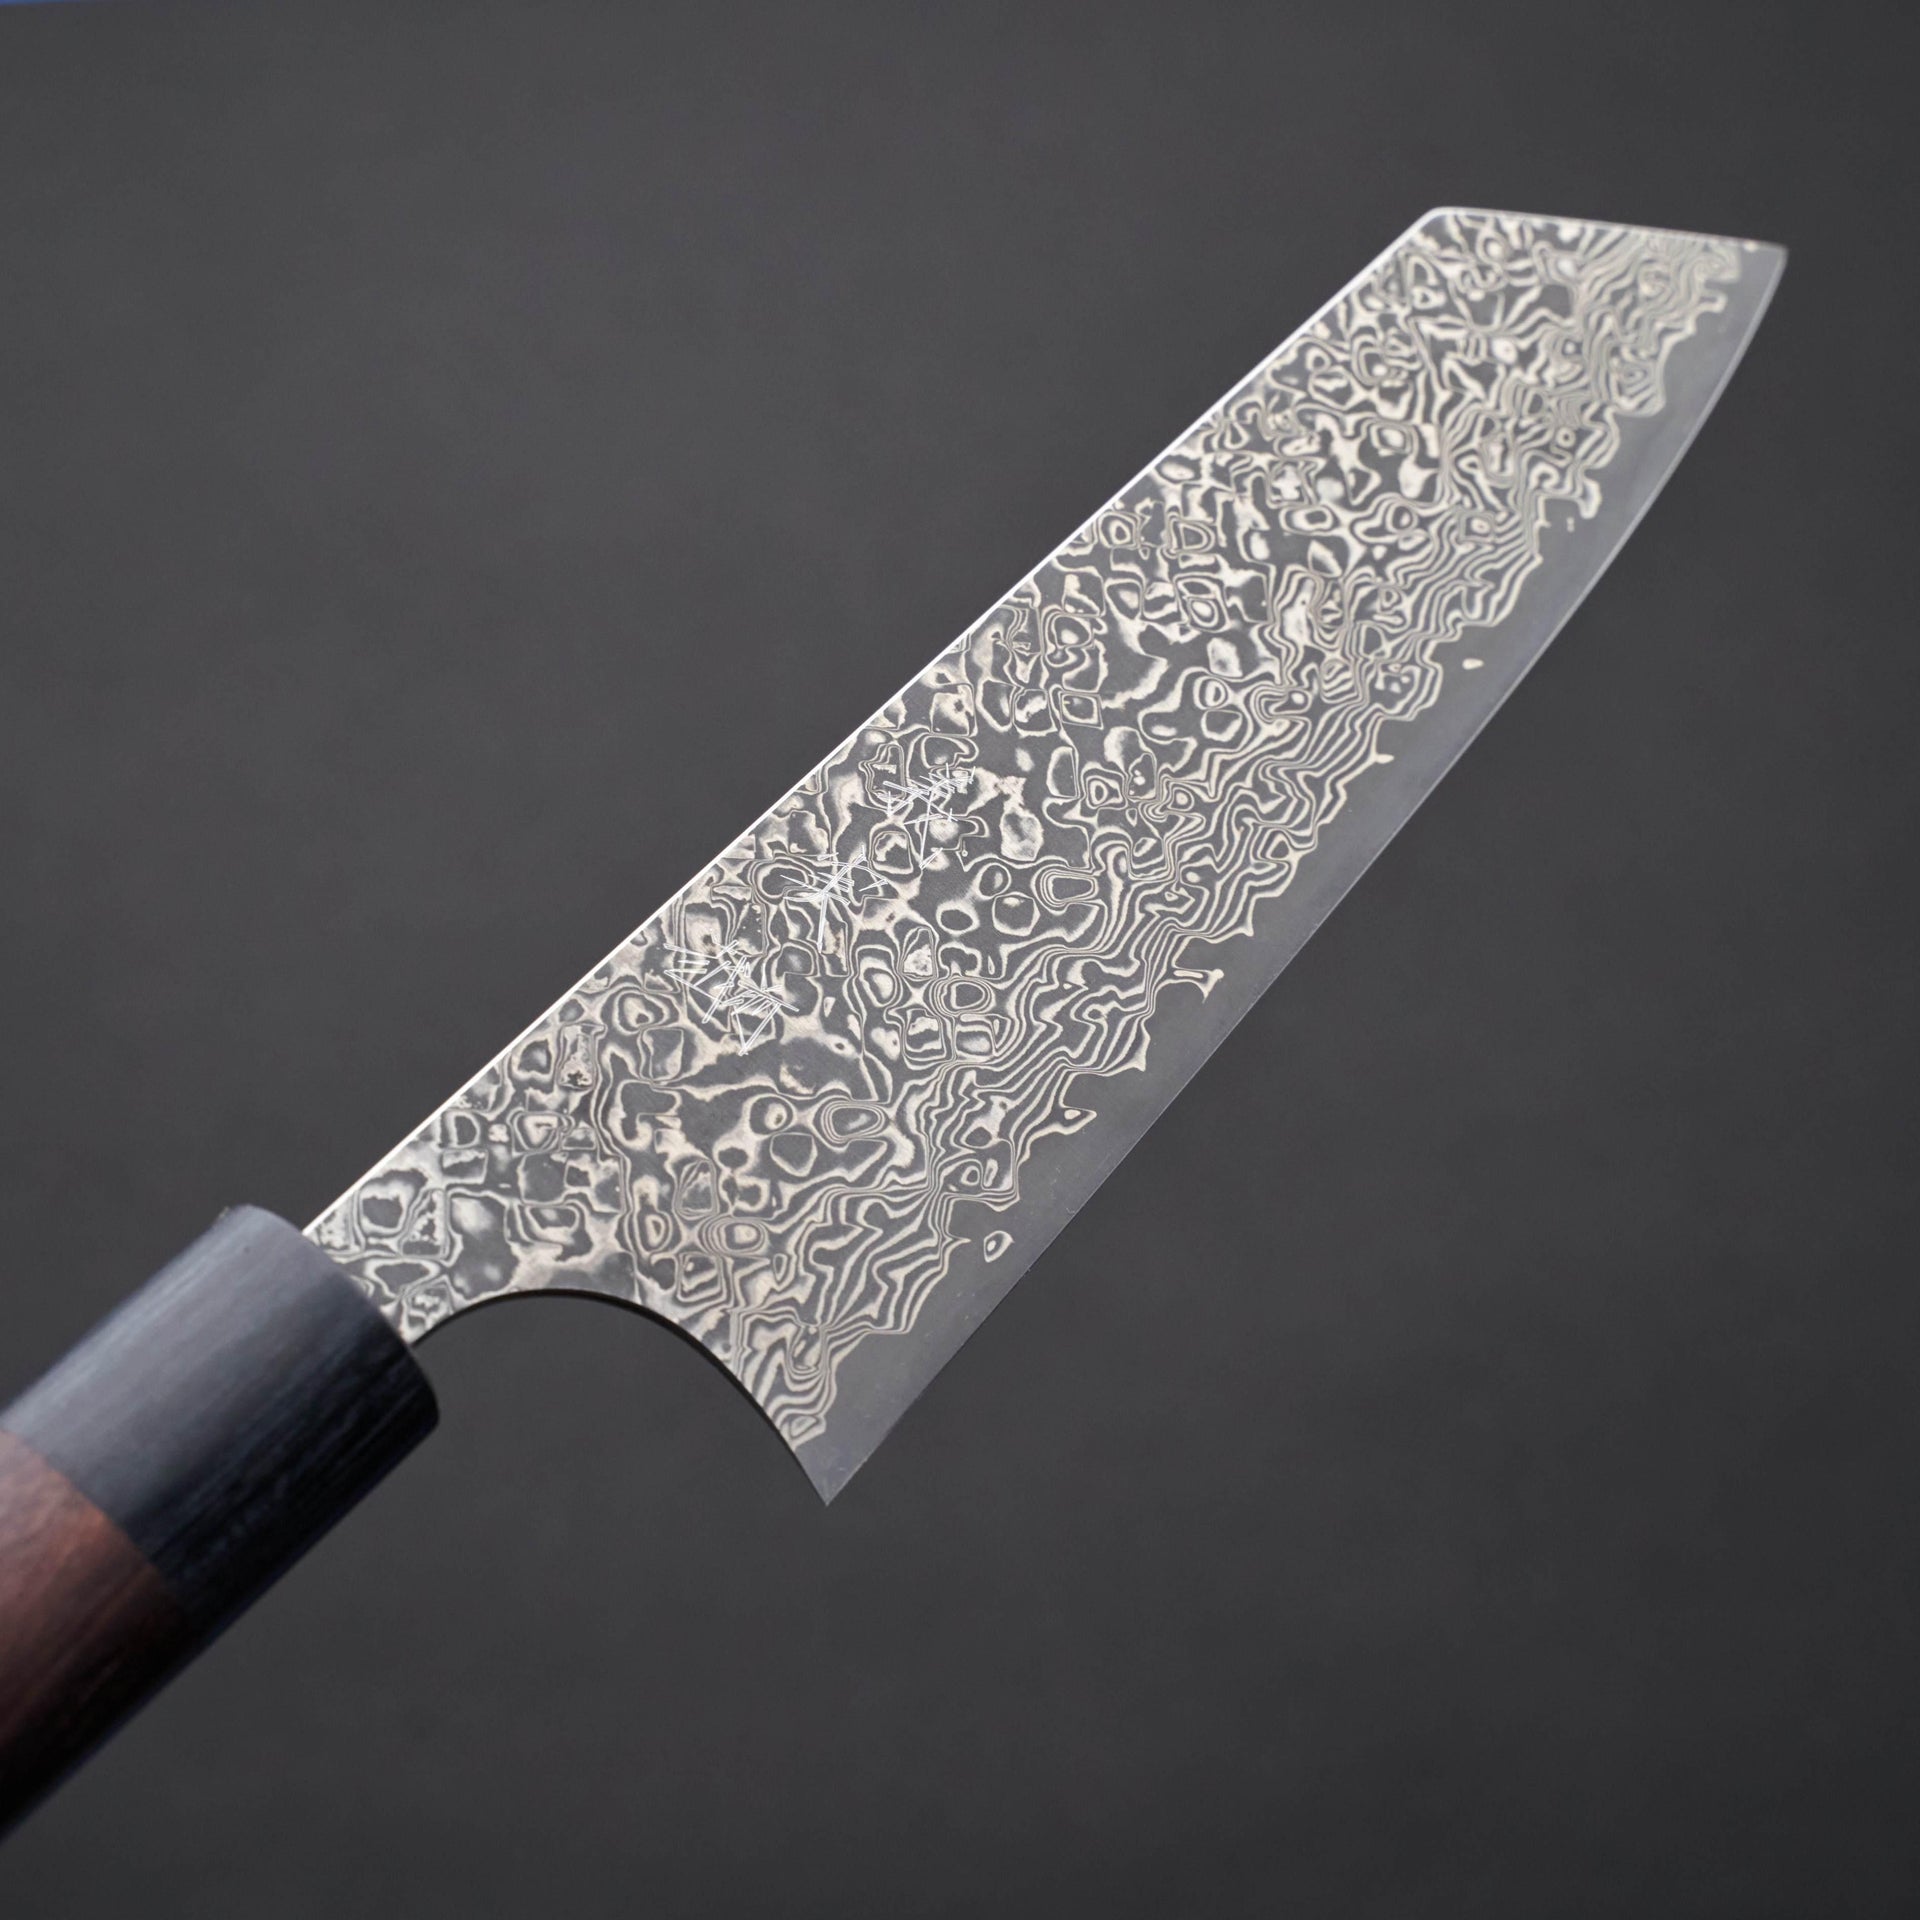 Kato VG10 Nickel Damascus Bunka 165mm-Knife-Yoshimi Kato-Carbon Knife Co